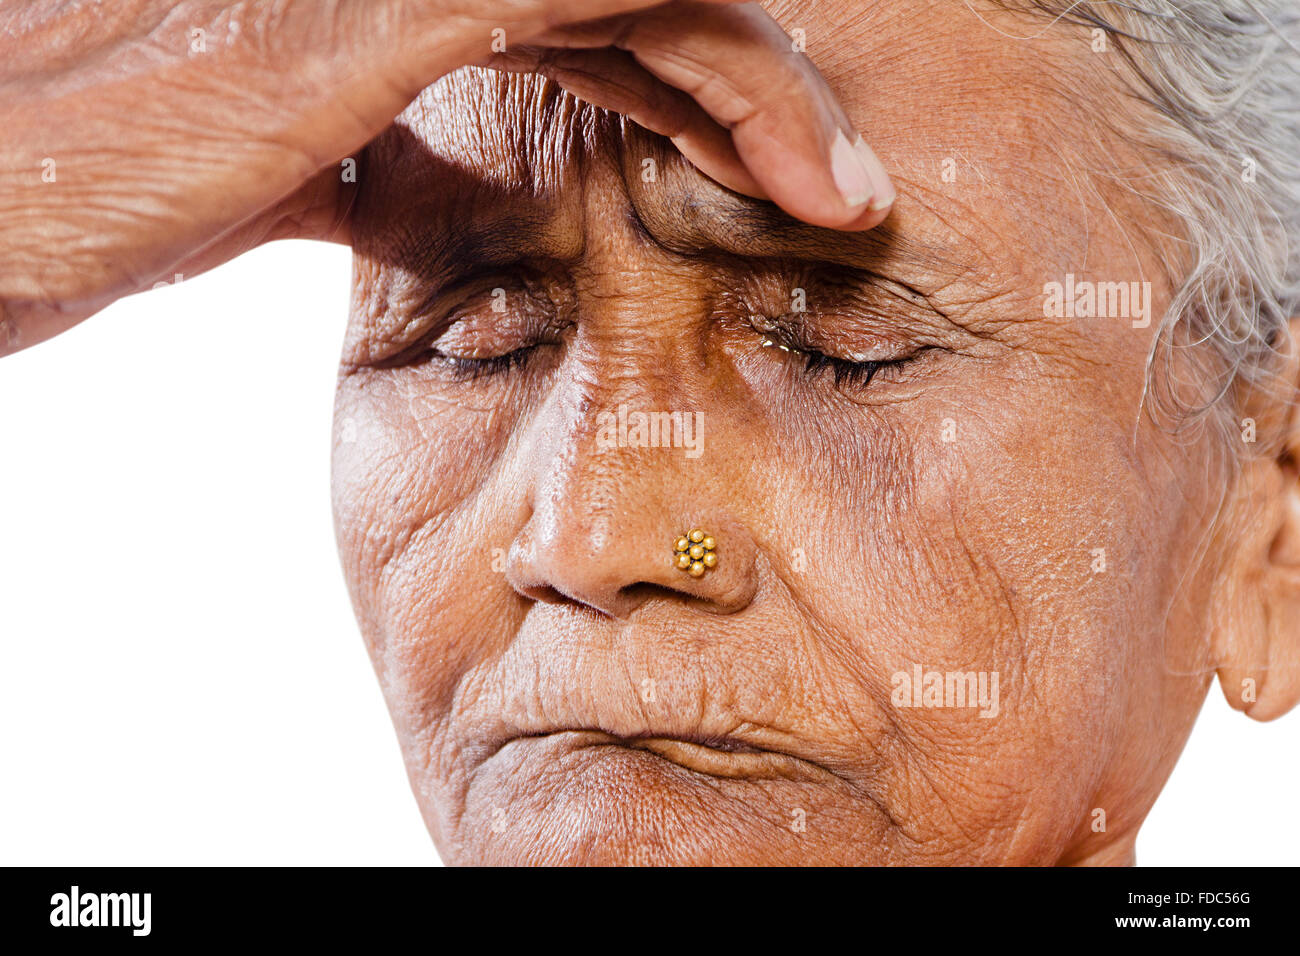 1 Senior Adult Woman Patient Headache Head in hands Stock Photo